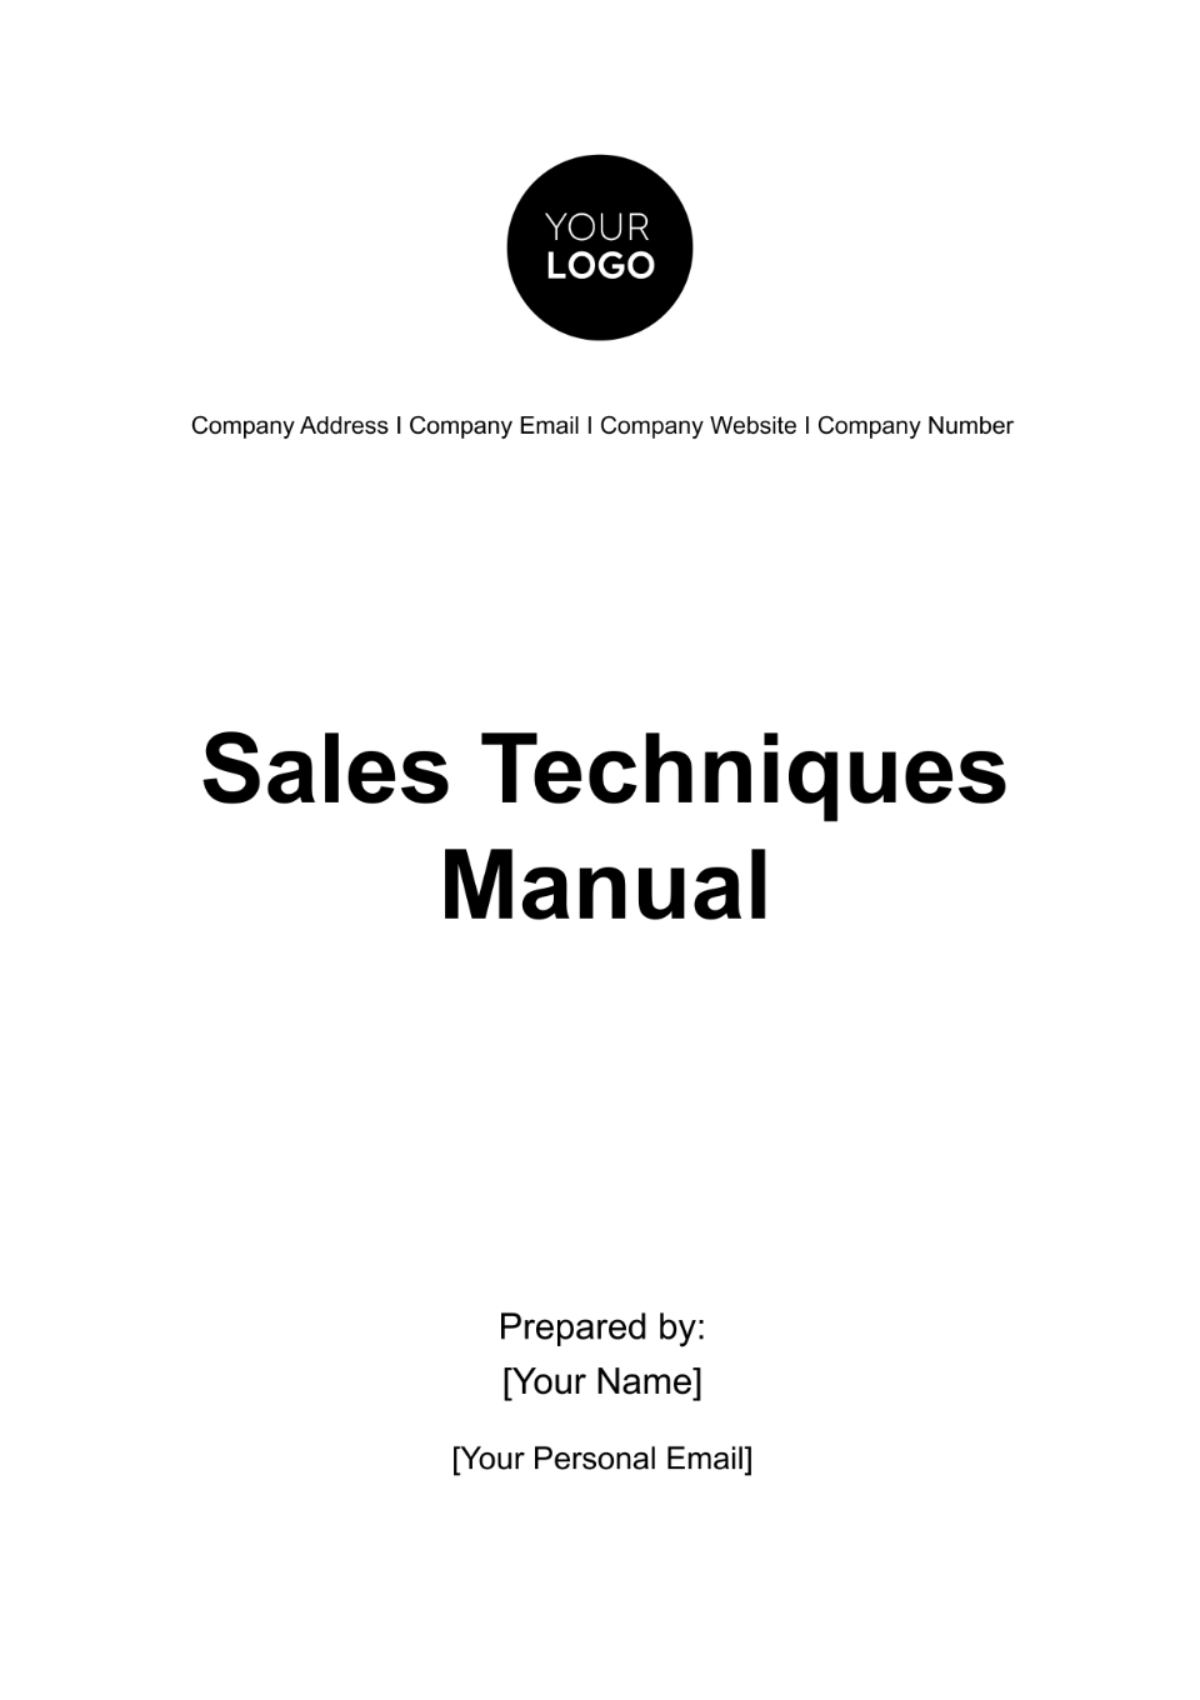 Sales Techniques Manual Template